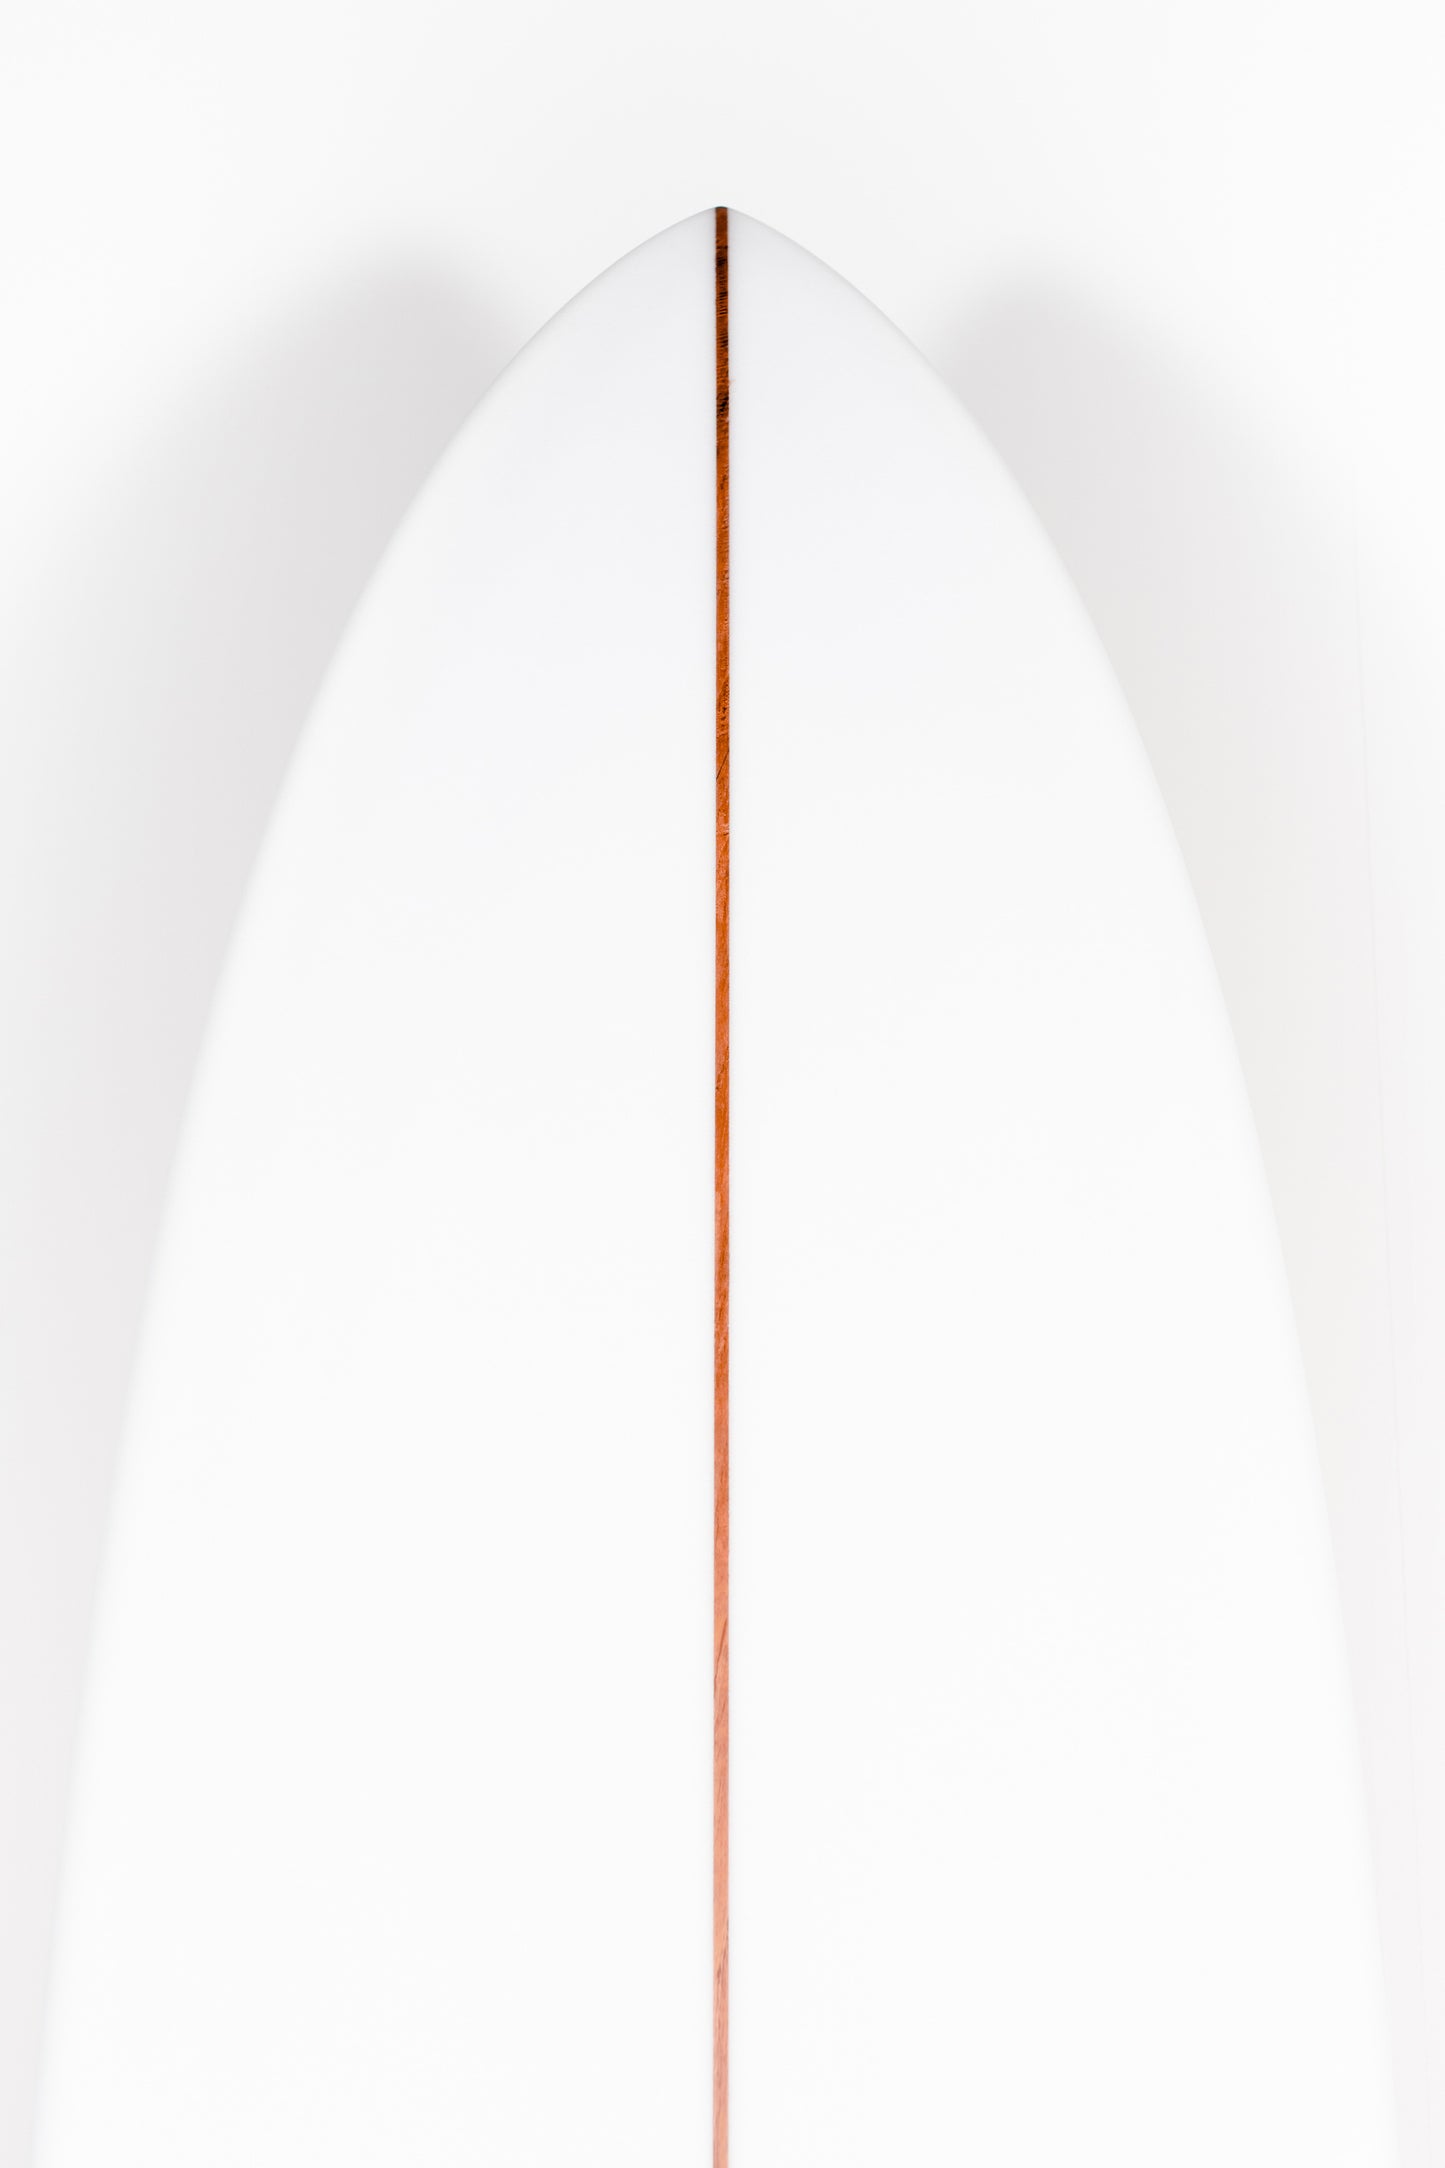 
                  
                    Pukas Surf Shop - Thomas Surfboards - LONG FISH - 7'8"x 22 x 3 - Ref. LONGFISH78
                  
                